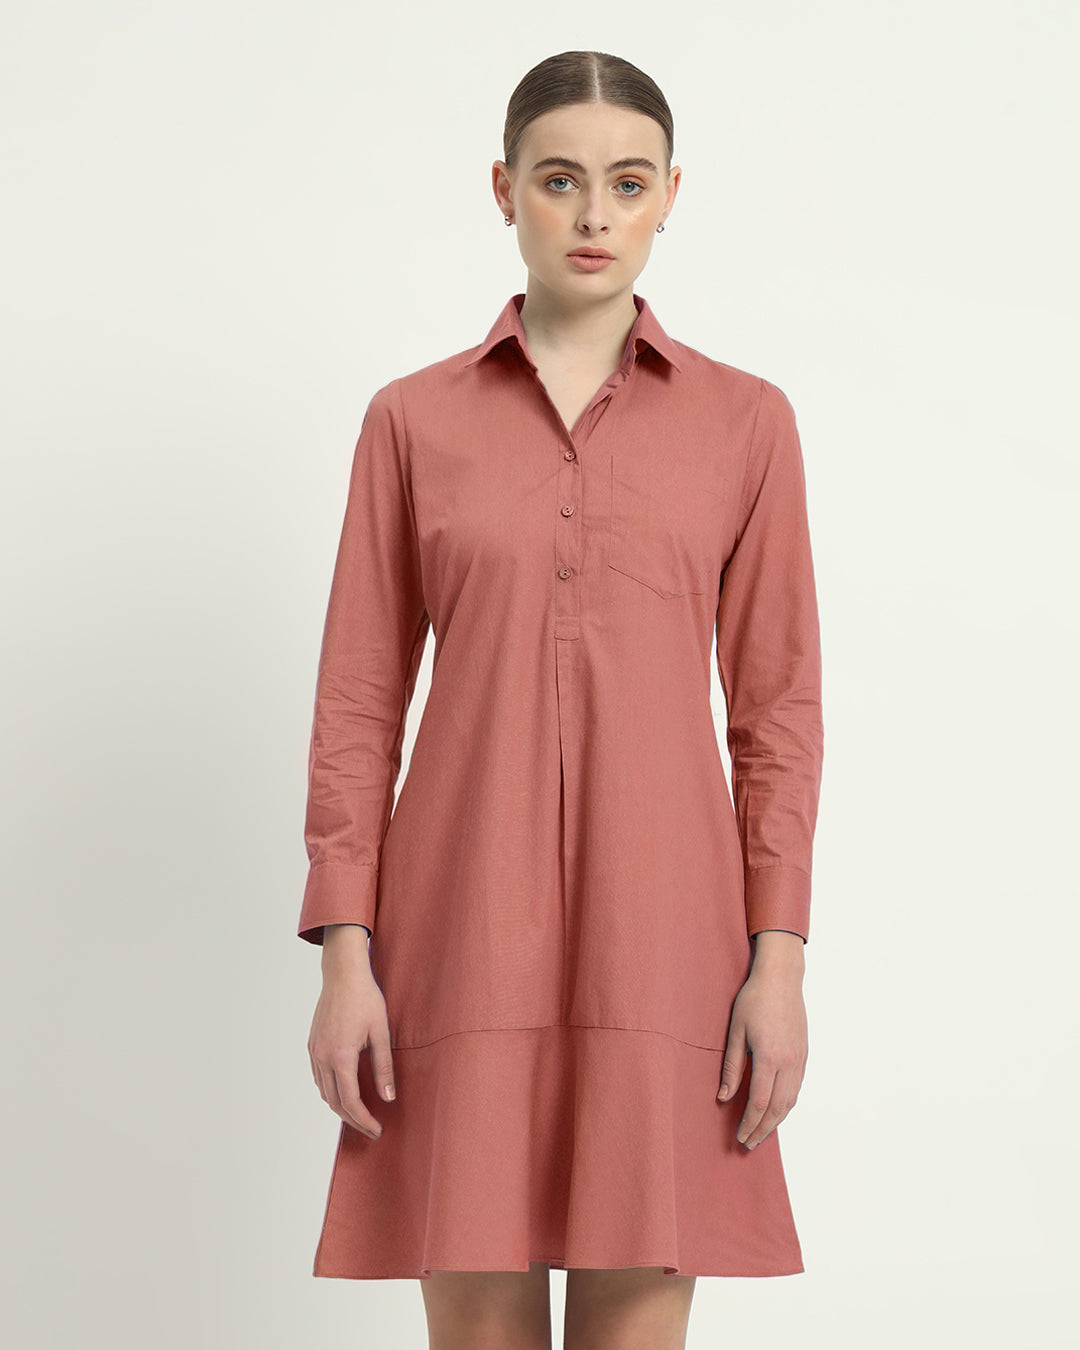 The Lyon Ivory Pink Cotton Dress